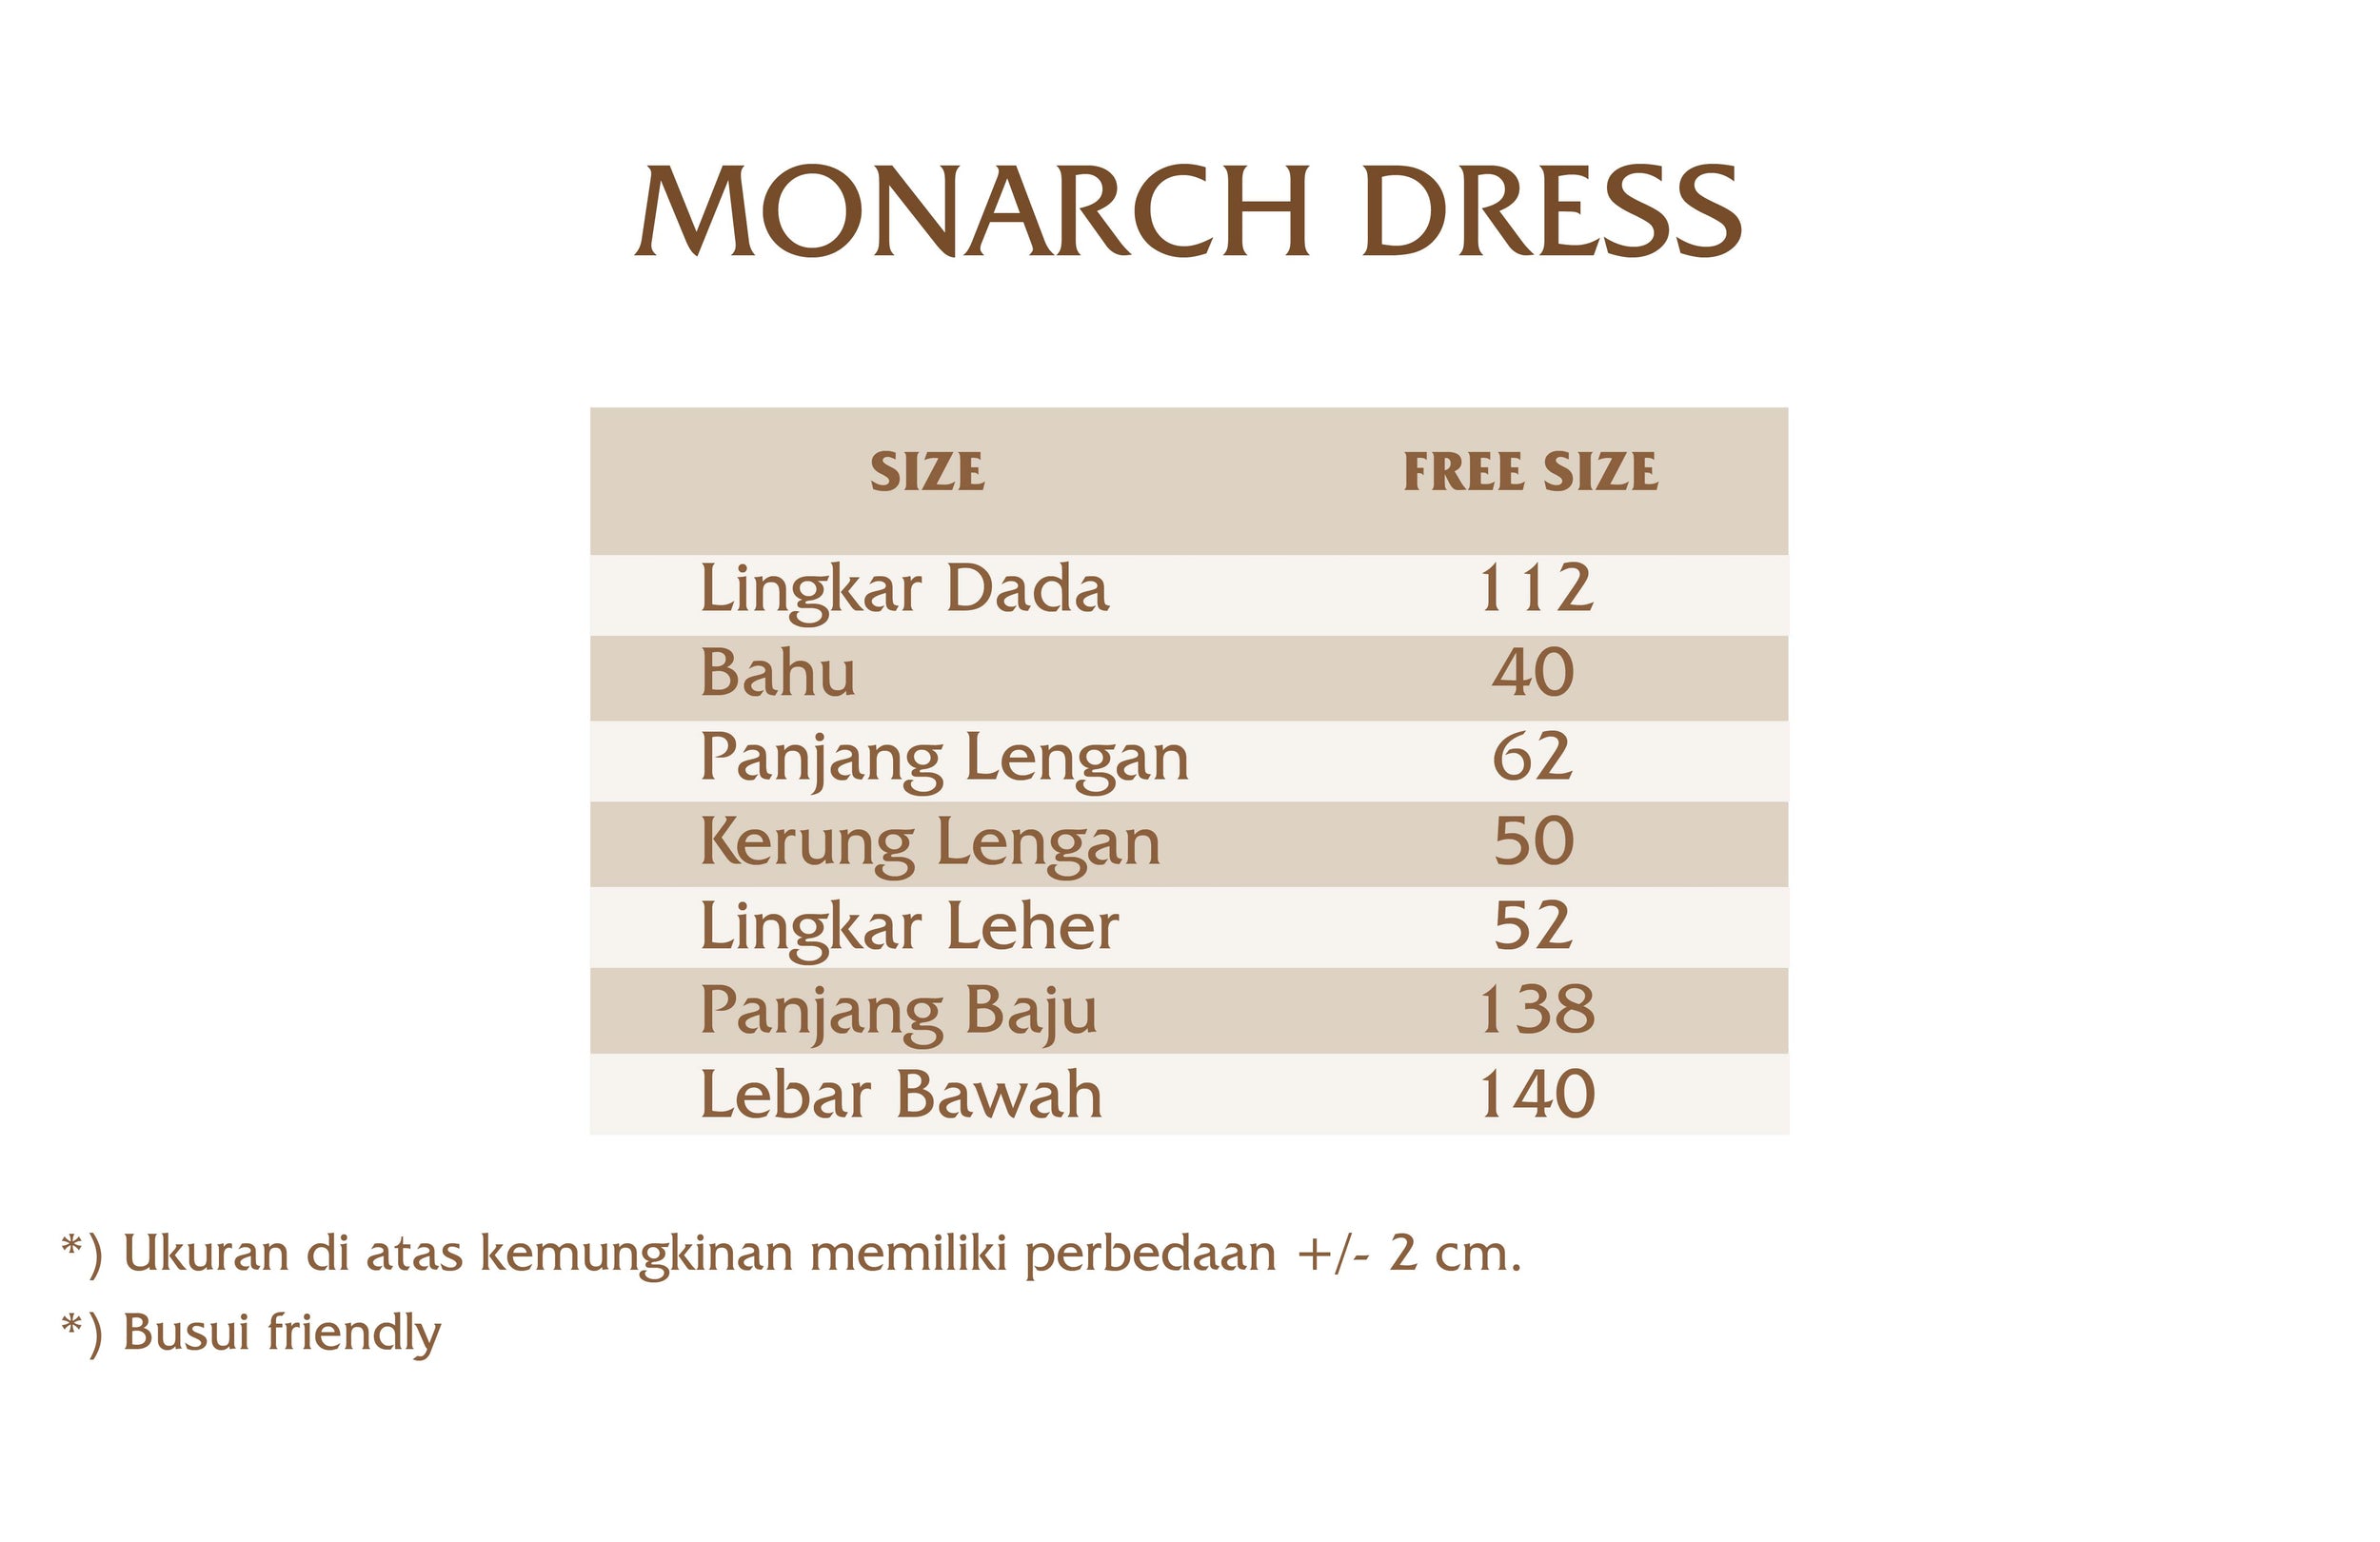 Monarch Dress